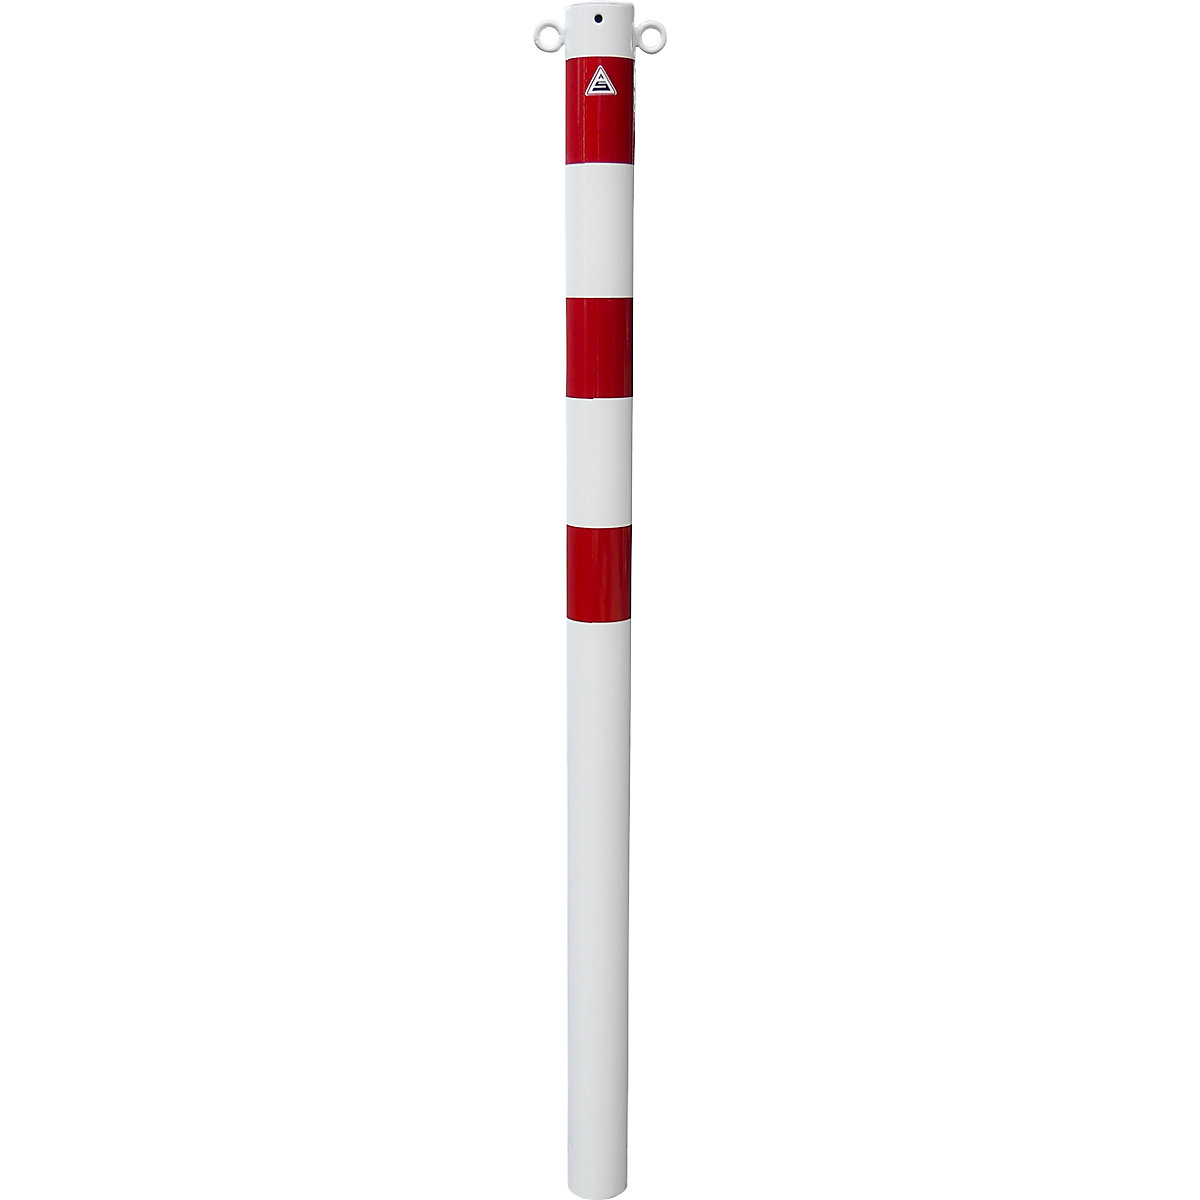 Zaporni stebrič, Ø 76 mm, bel / rdeč, za vbetoniranje, z 2 ušescema-2